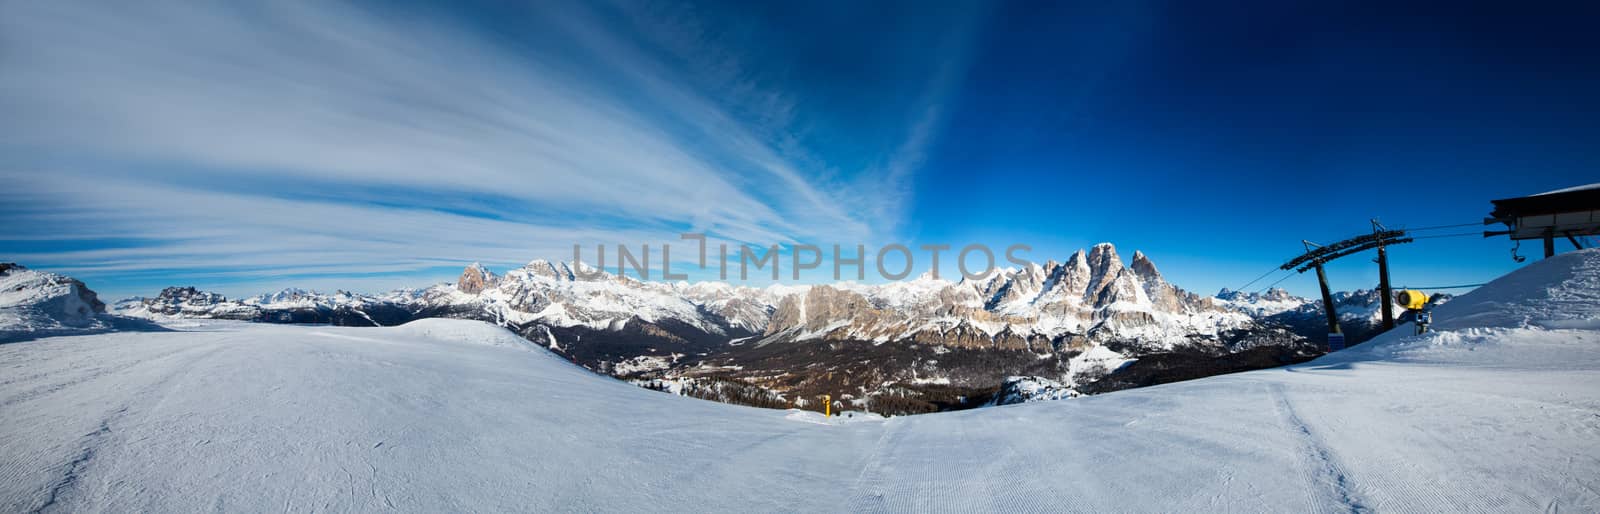 Dolomities Dolomiti Italy in wintertime beautiful alps winter mountains and ski slope Cortina d'Ampezzo Faloria skiing resort area